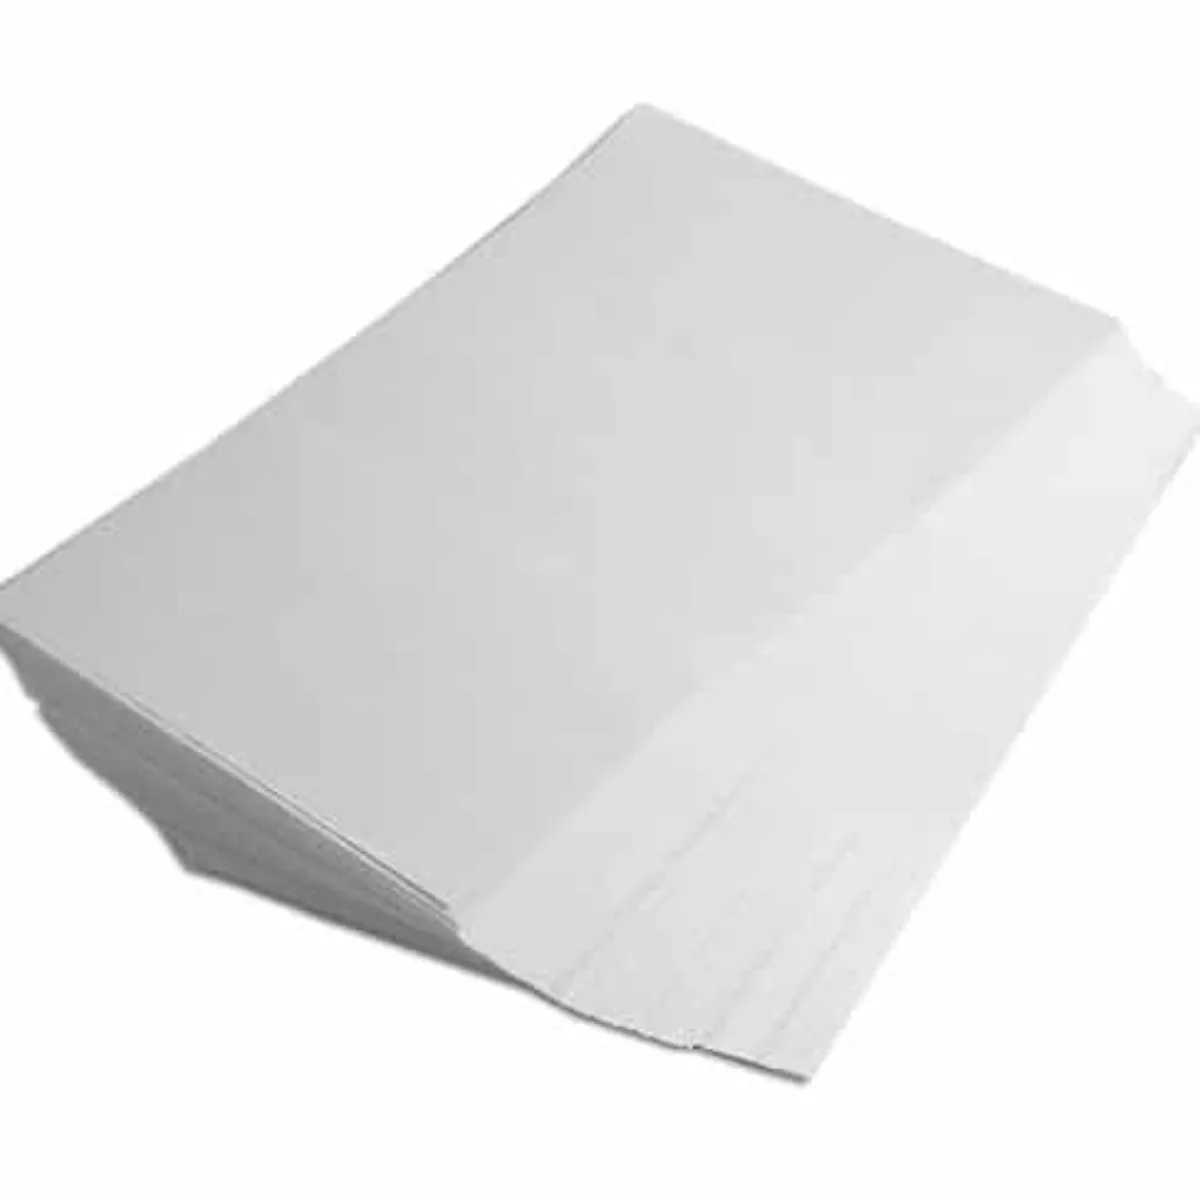 Graphtek - 110 feuilles de papier transfert par